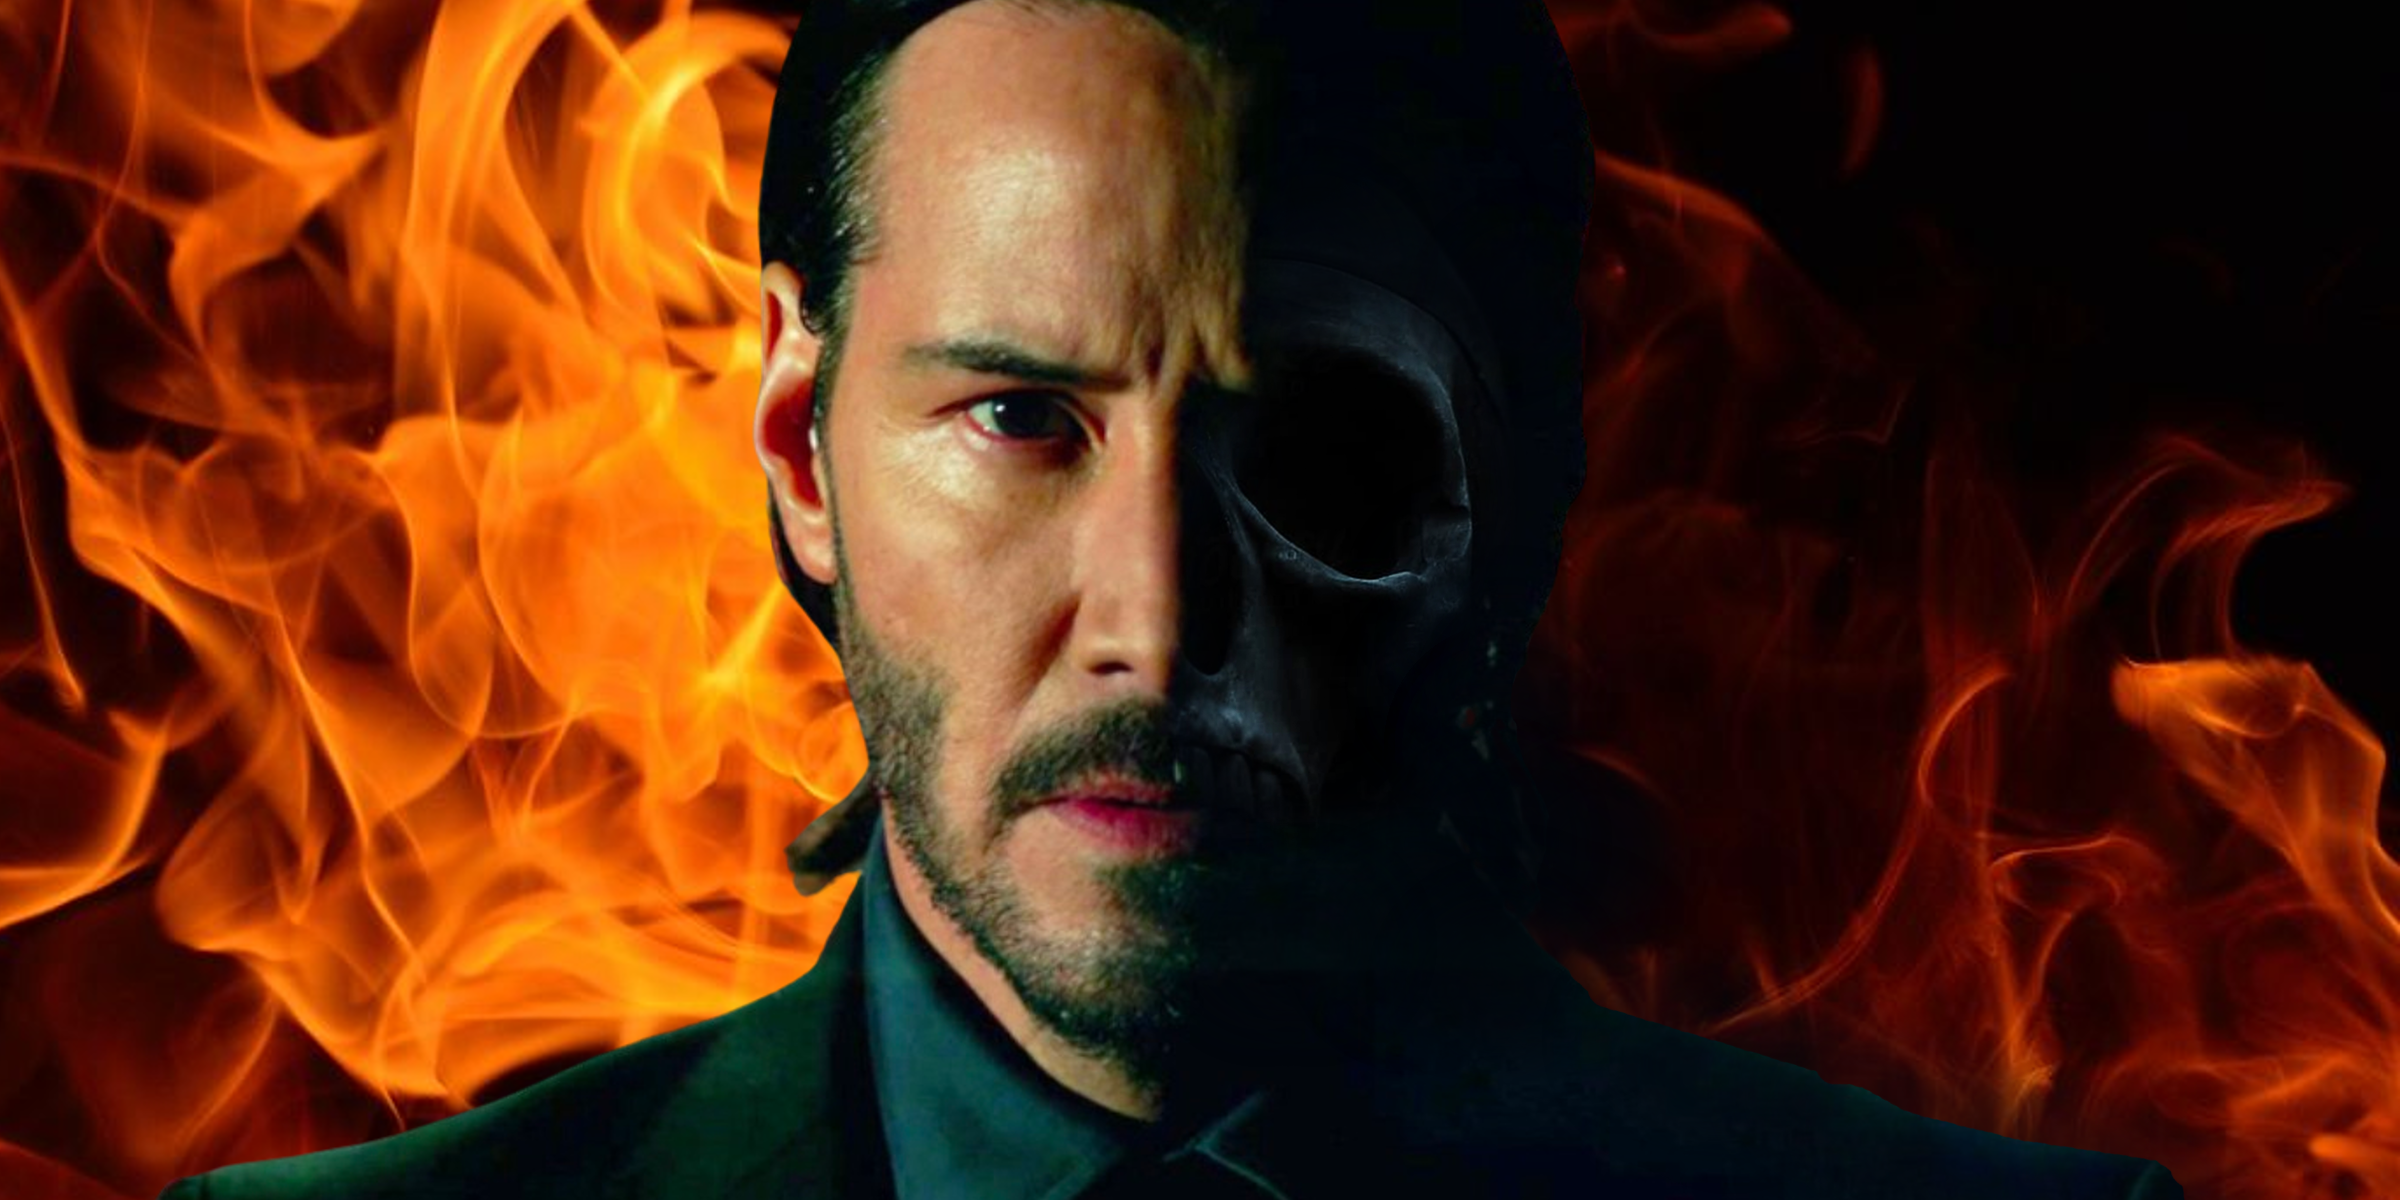 Keanu Reeves as Ghost Rider with flames behind him